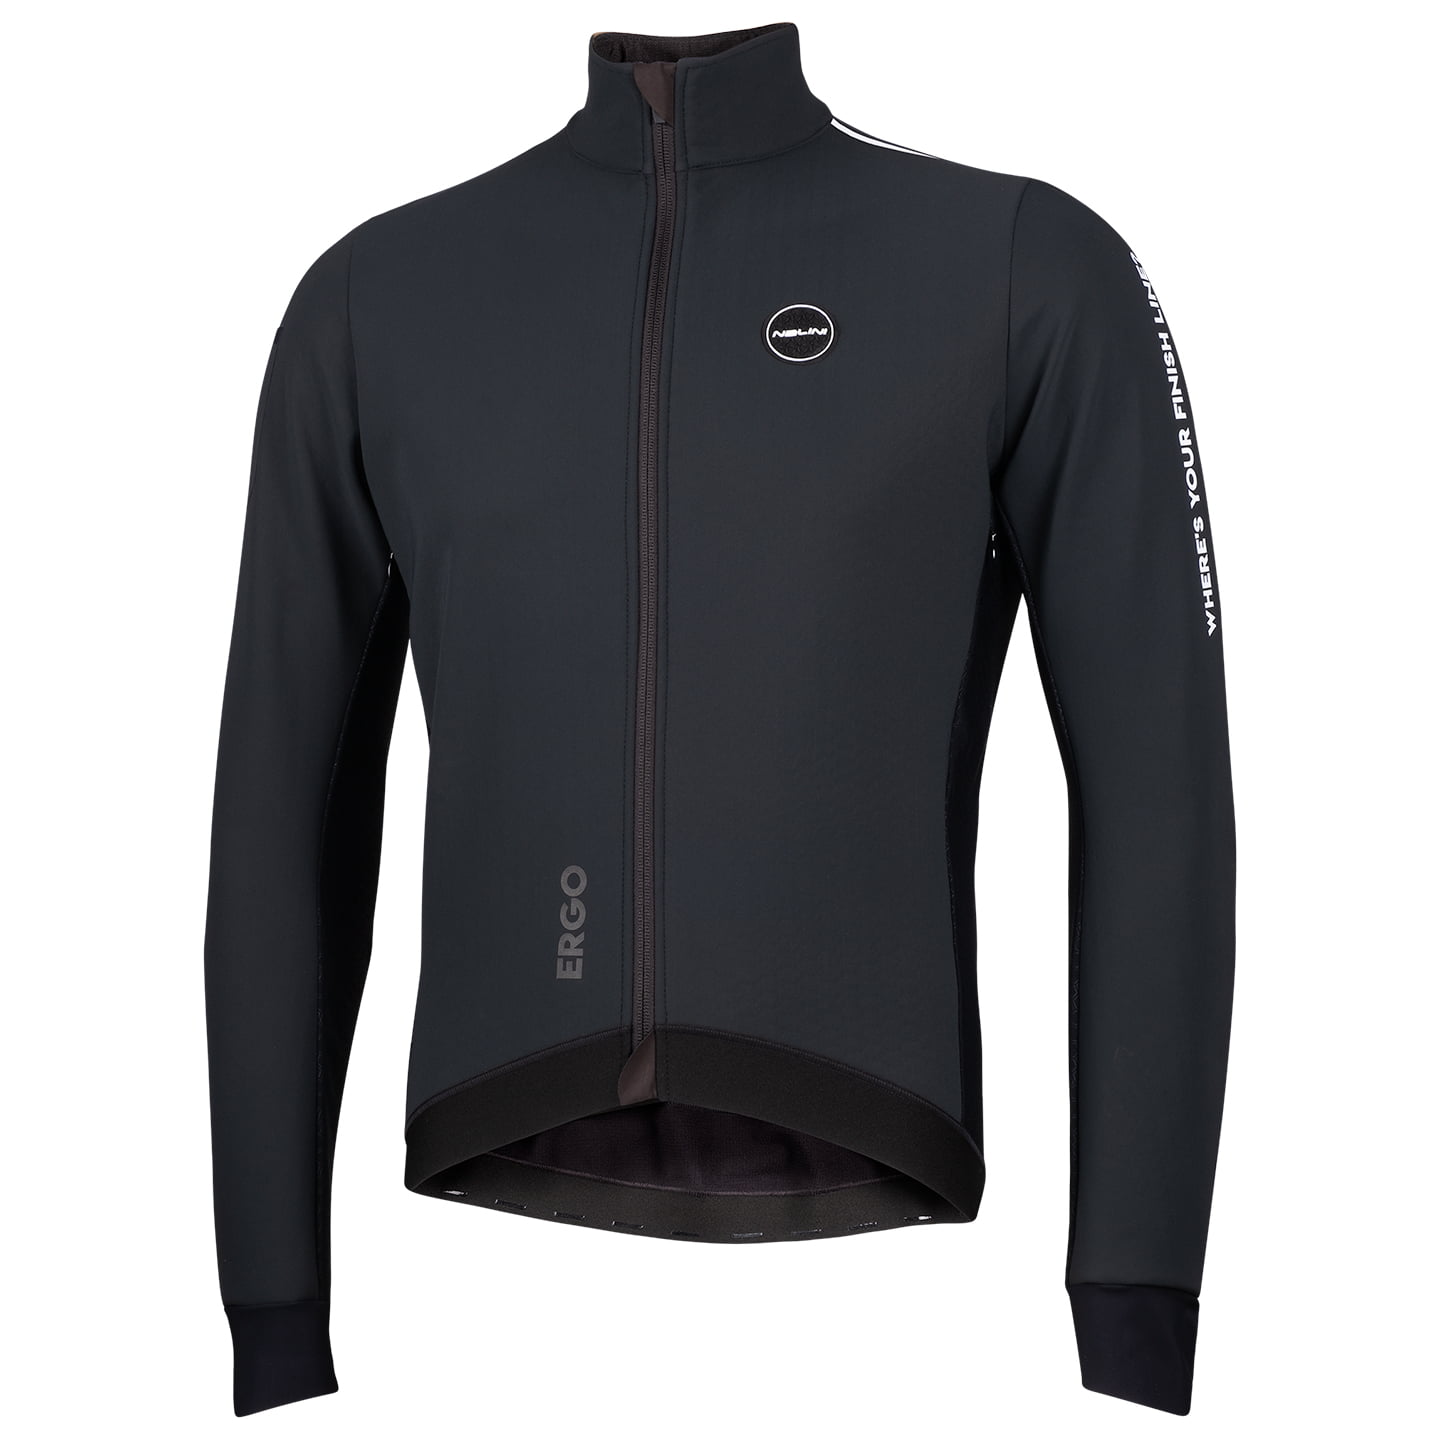 NALINI Winter Jacket New Ergo Warm Thermal Jacket, for men, size 2XL, Winter jacket, Cycling clothing